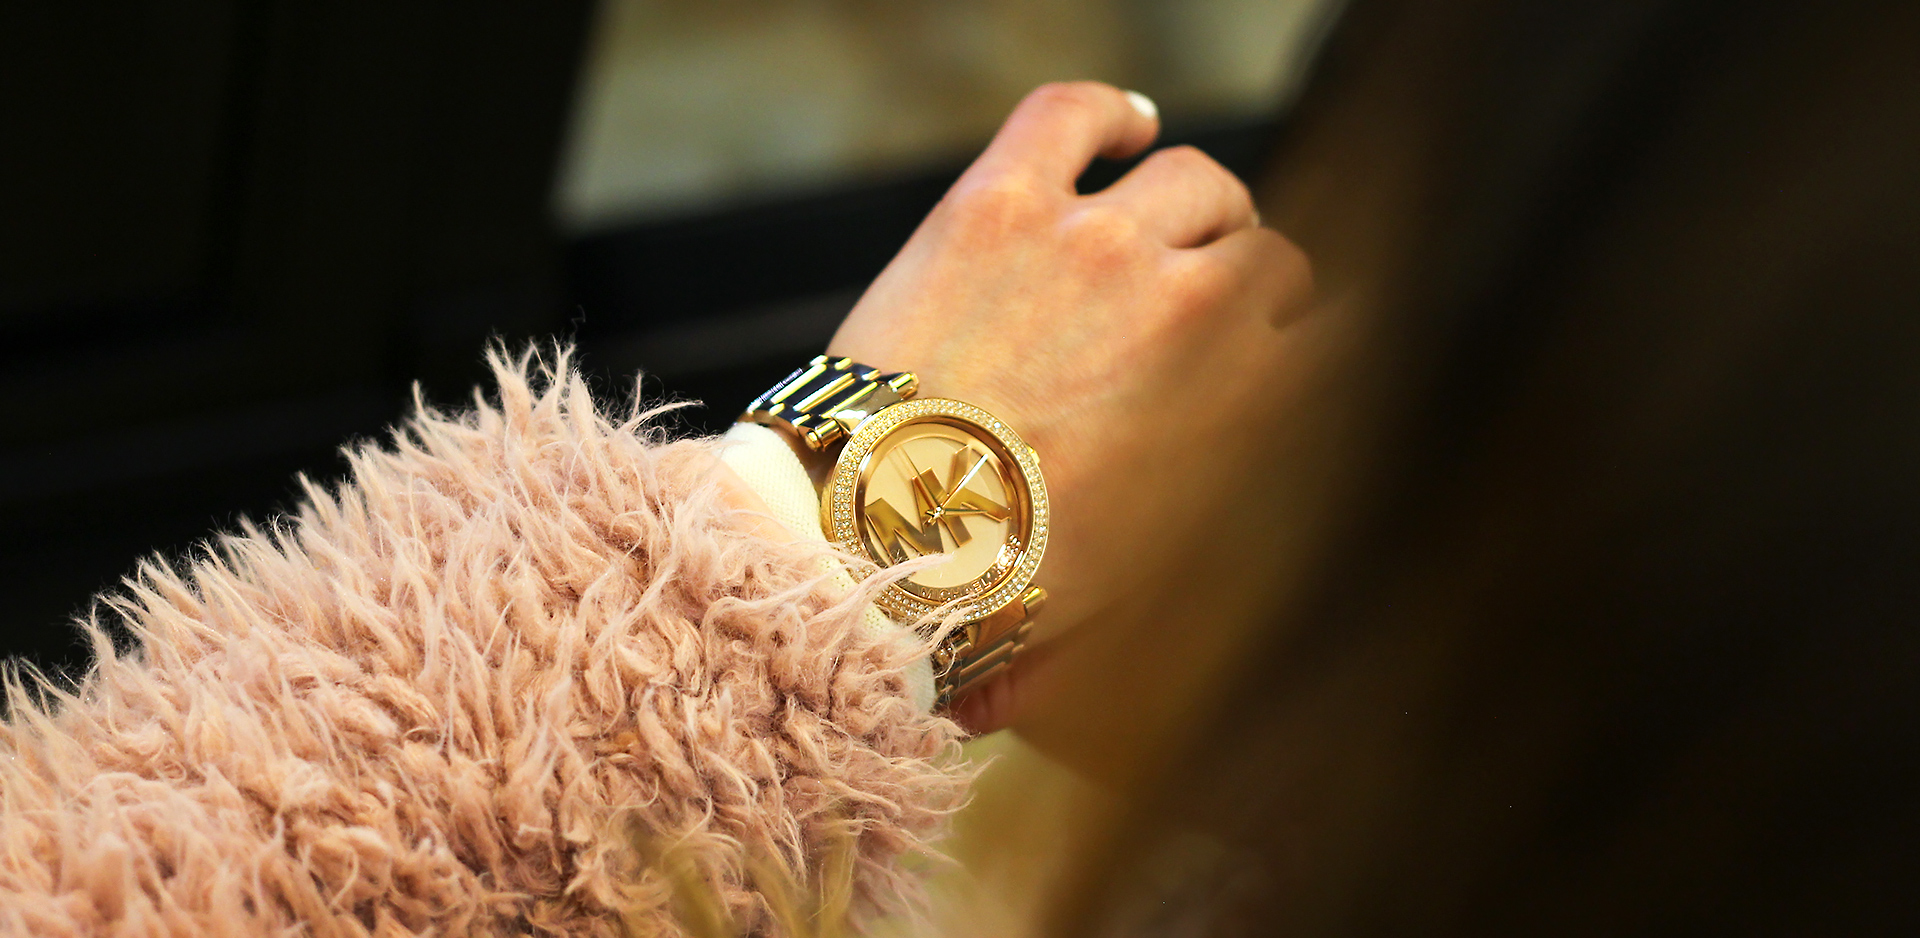 Часы ДЕКА: DKNY, женские часы Michael Kors, Madeline от Armani Exchange